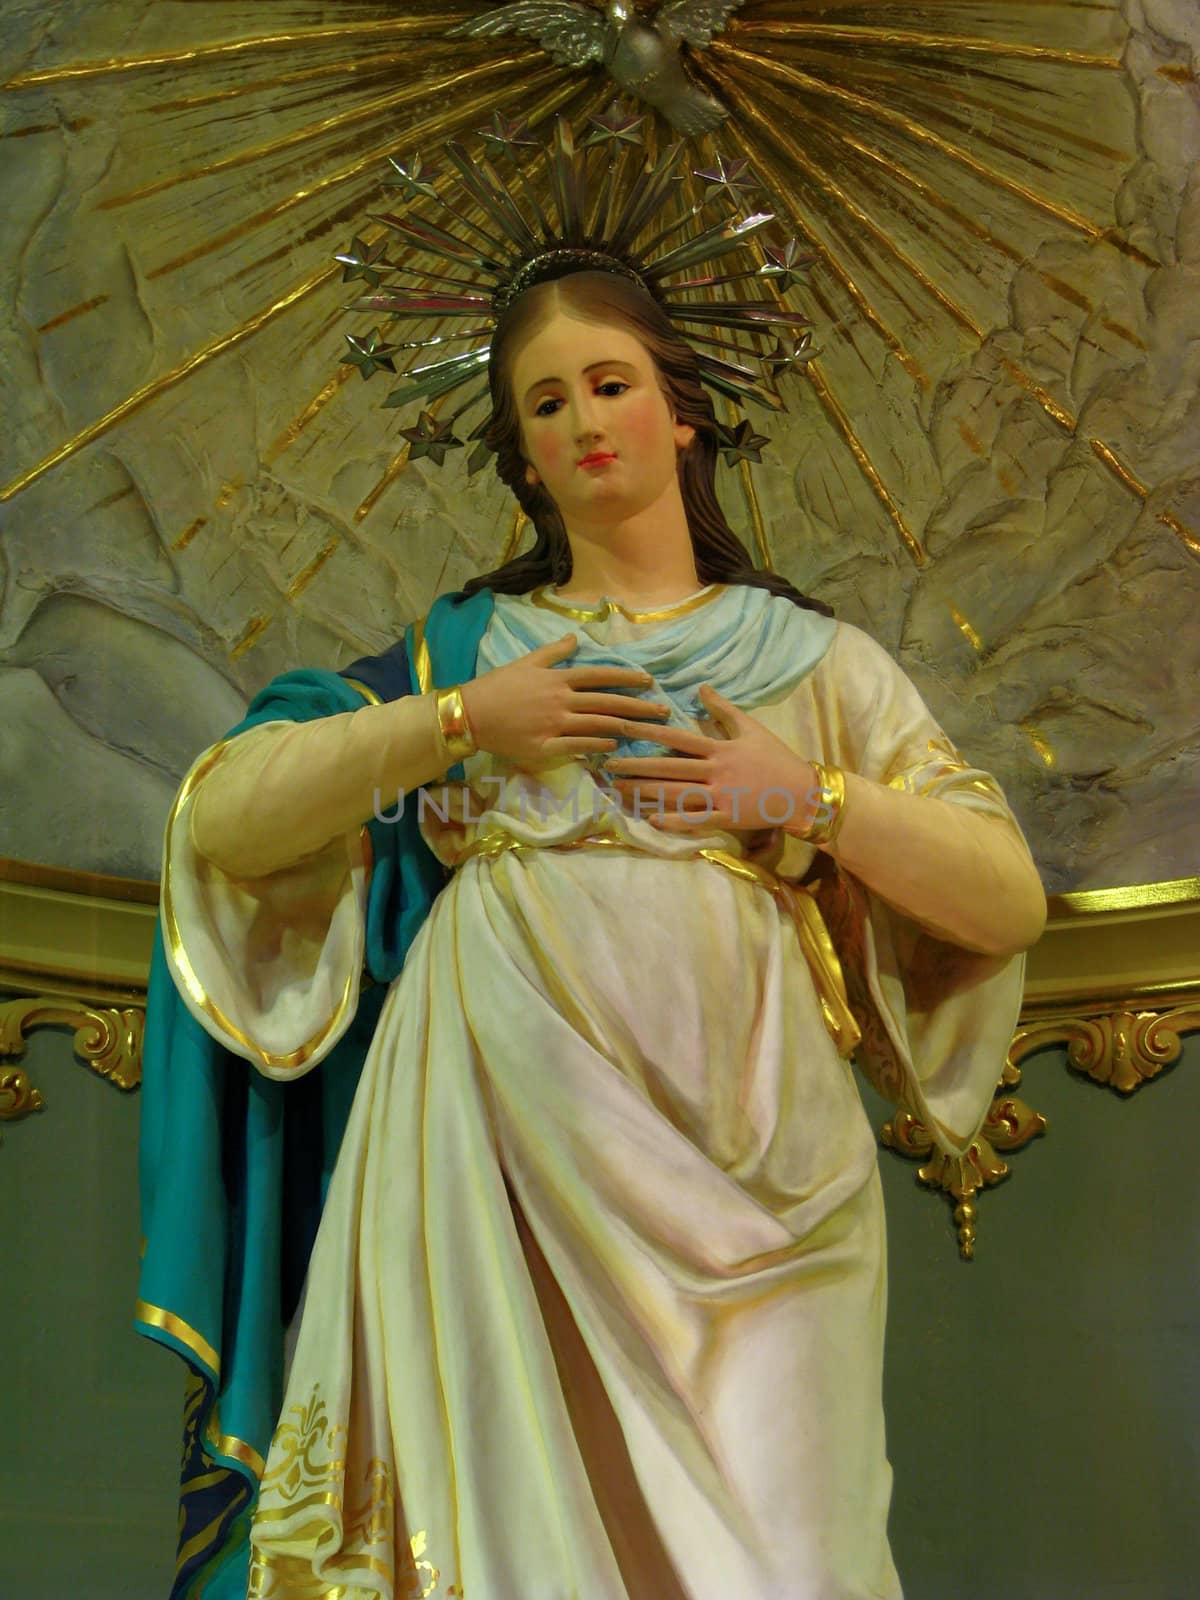 Mary Immaculate by fajjenzu